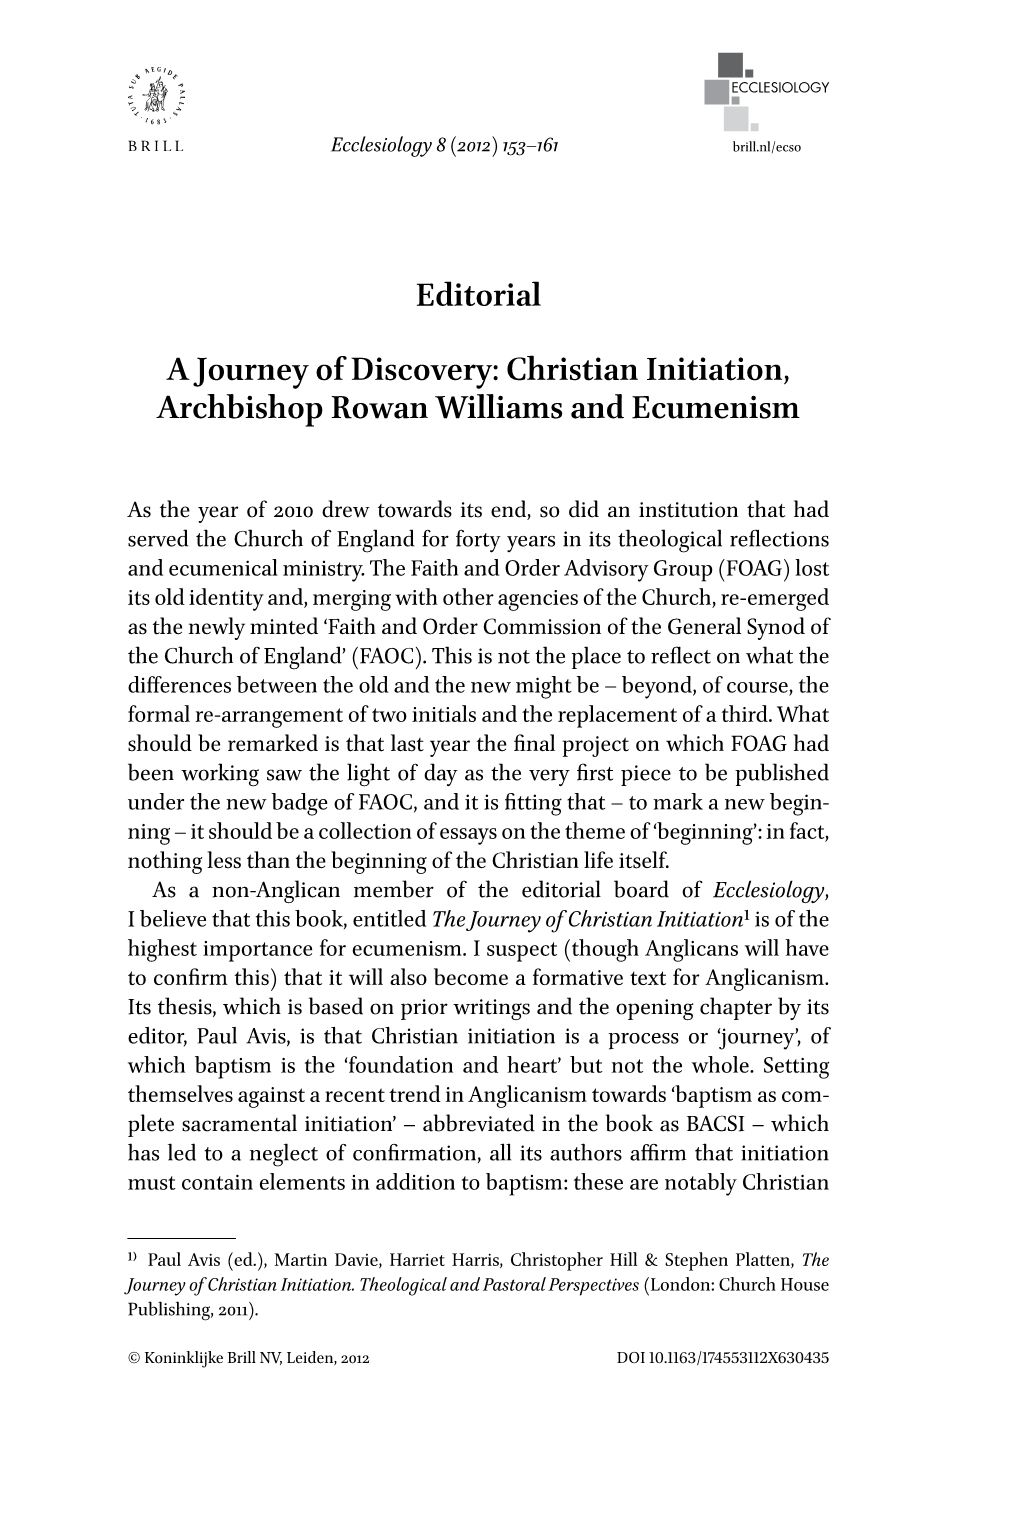 Christian Initiation, Archbishop Rowan Williams and Ecumenism